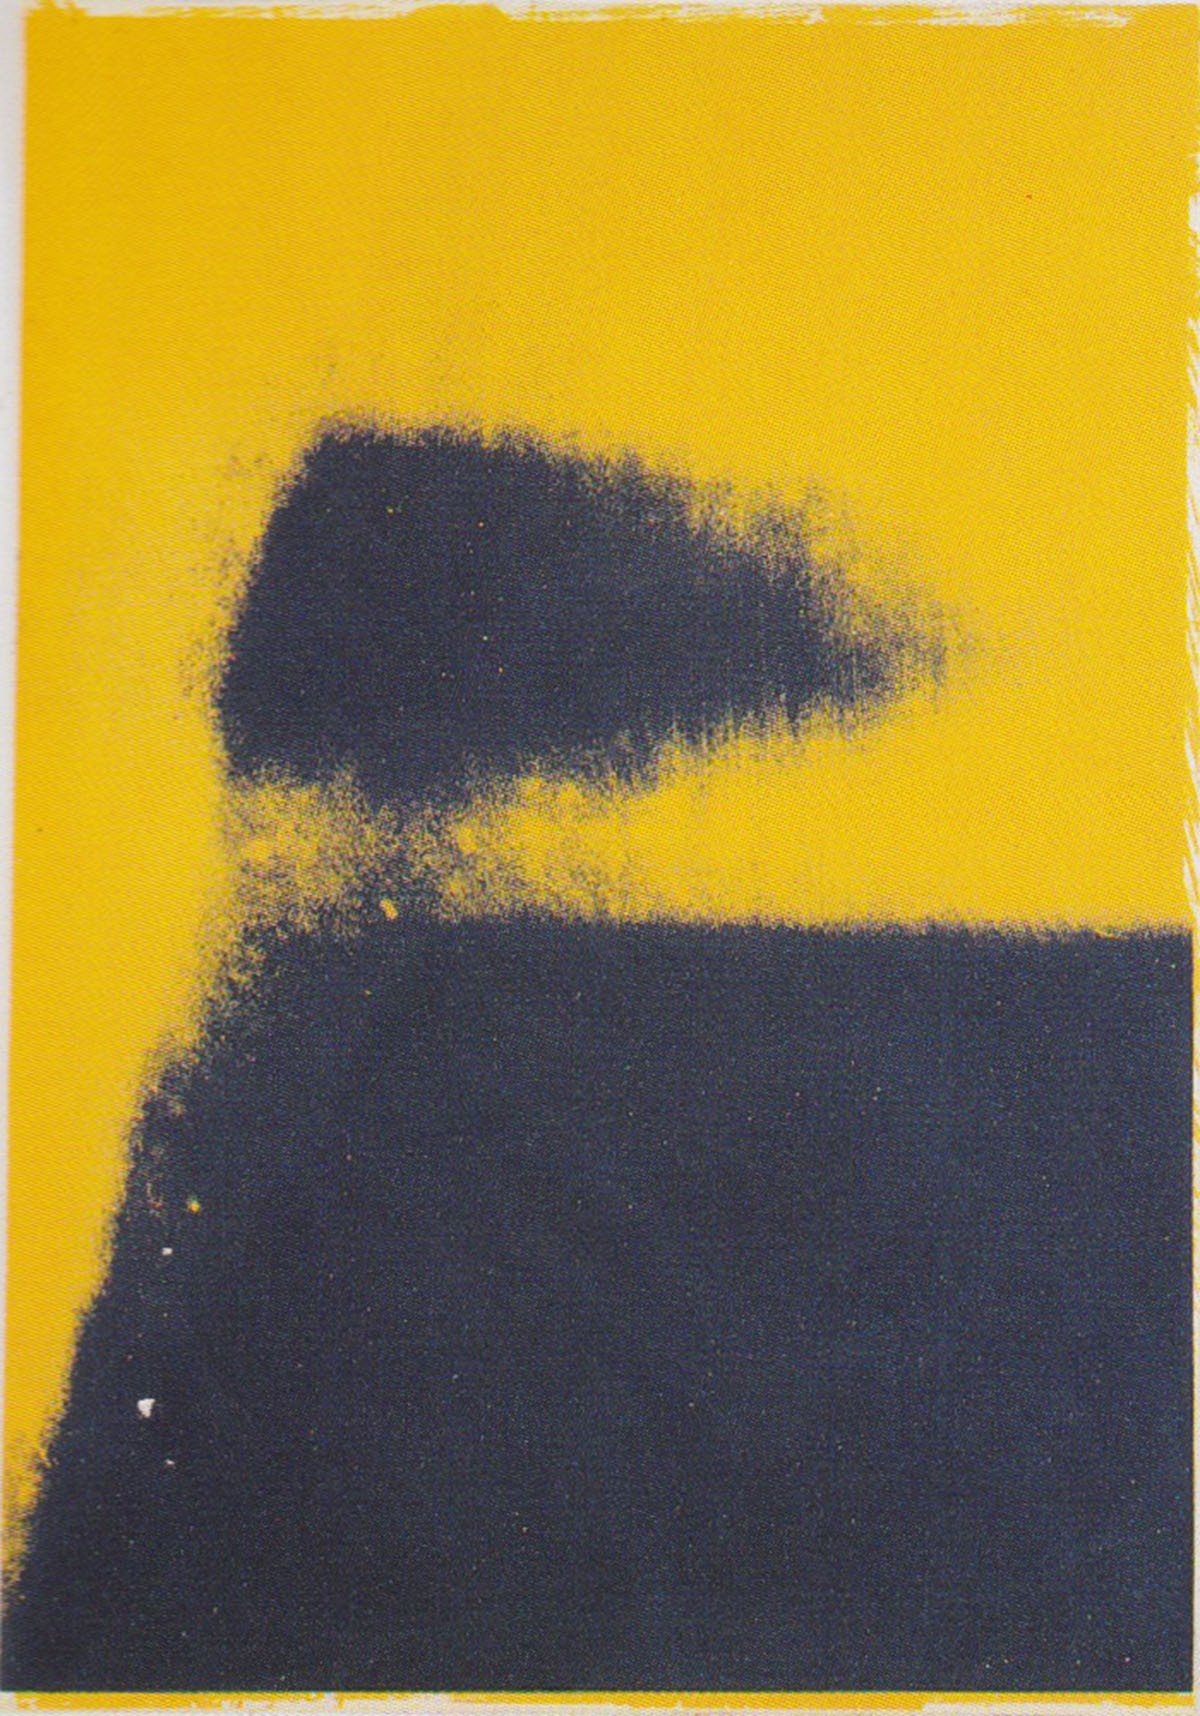 Andy Warhol | Shadows I 204 | 1979 | Image of Artists' work.